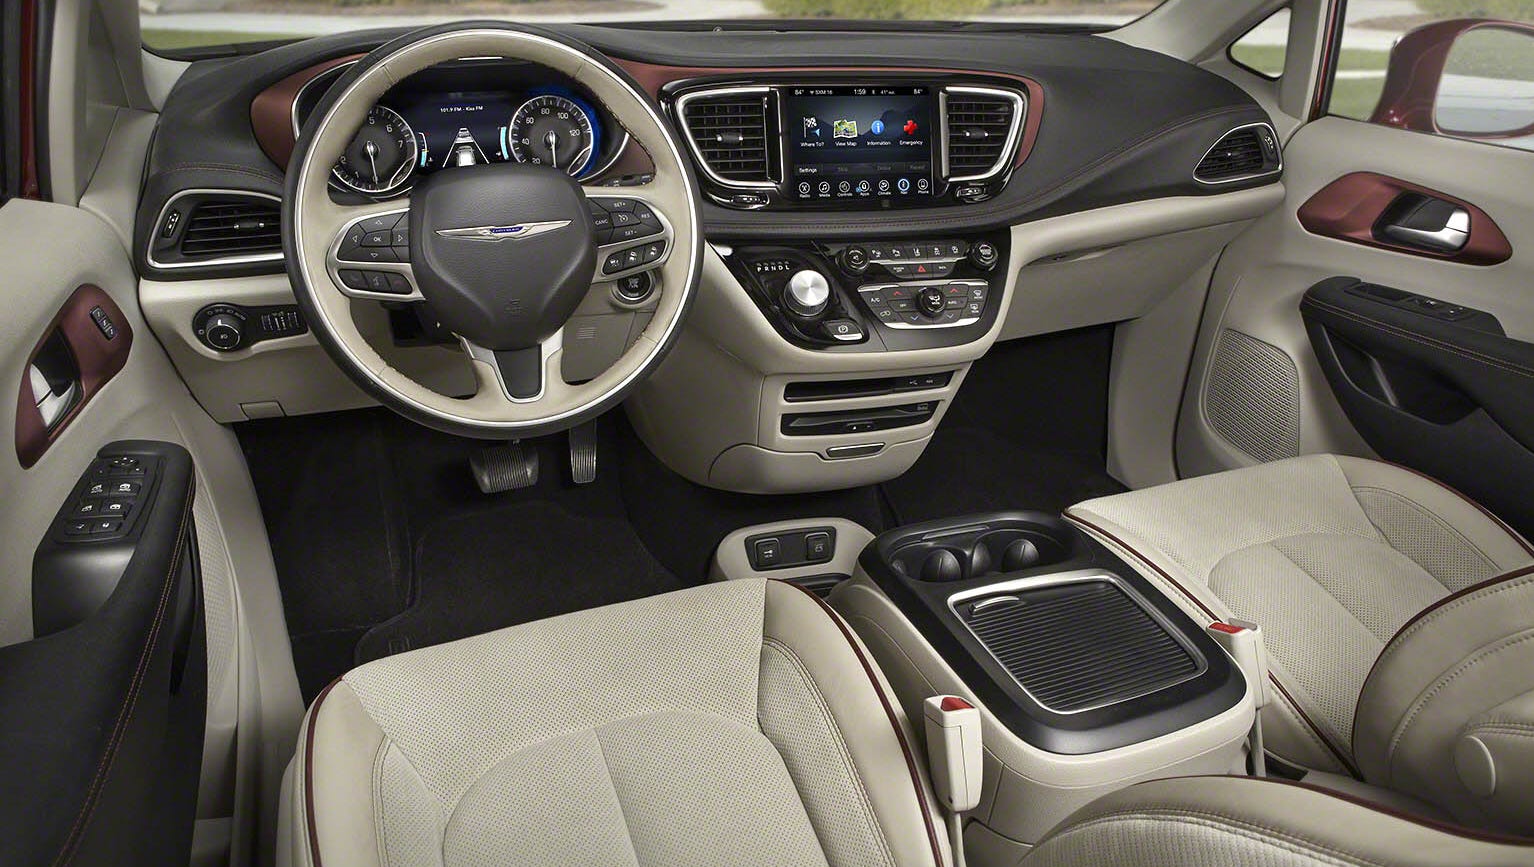 2017 Chrysler Pacifica minivan is a 'monumental leap' forward